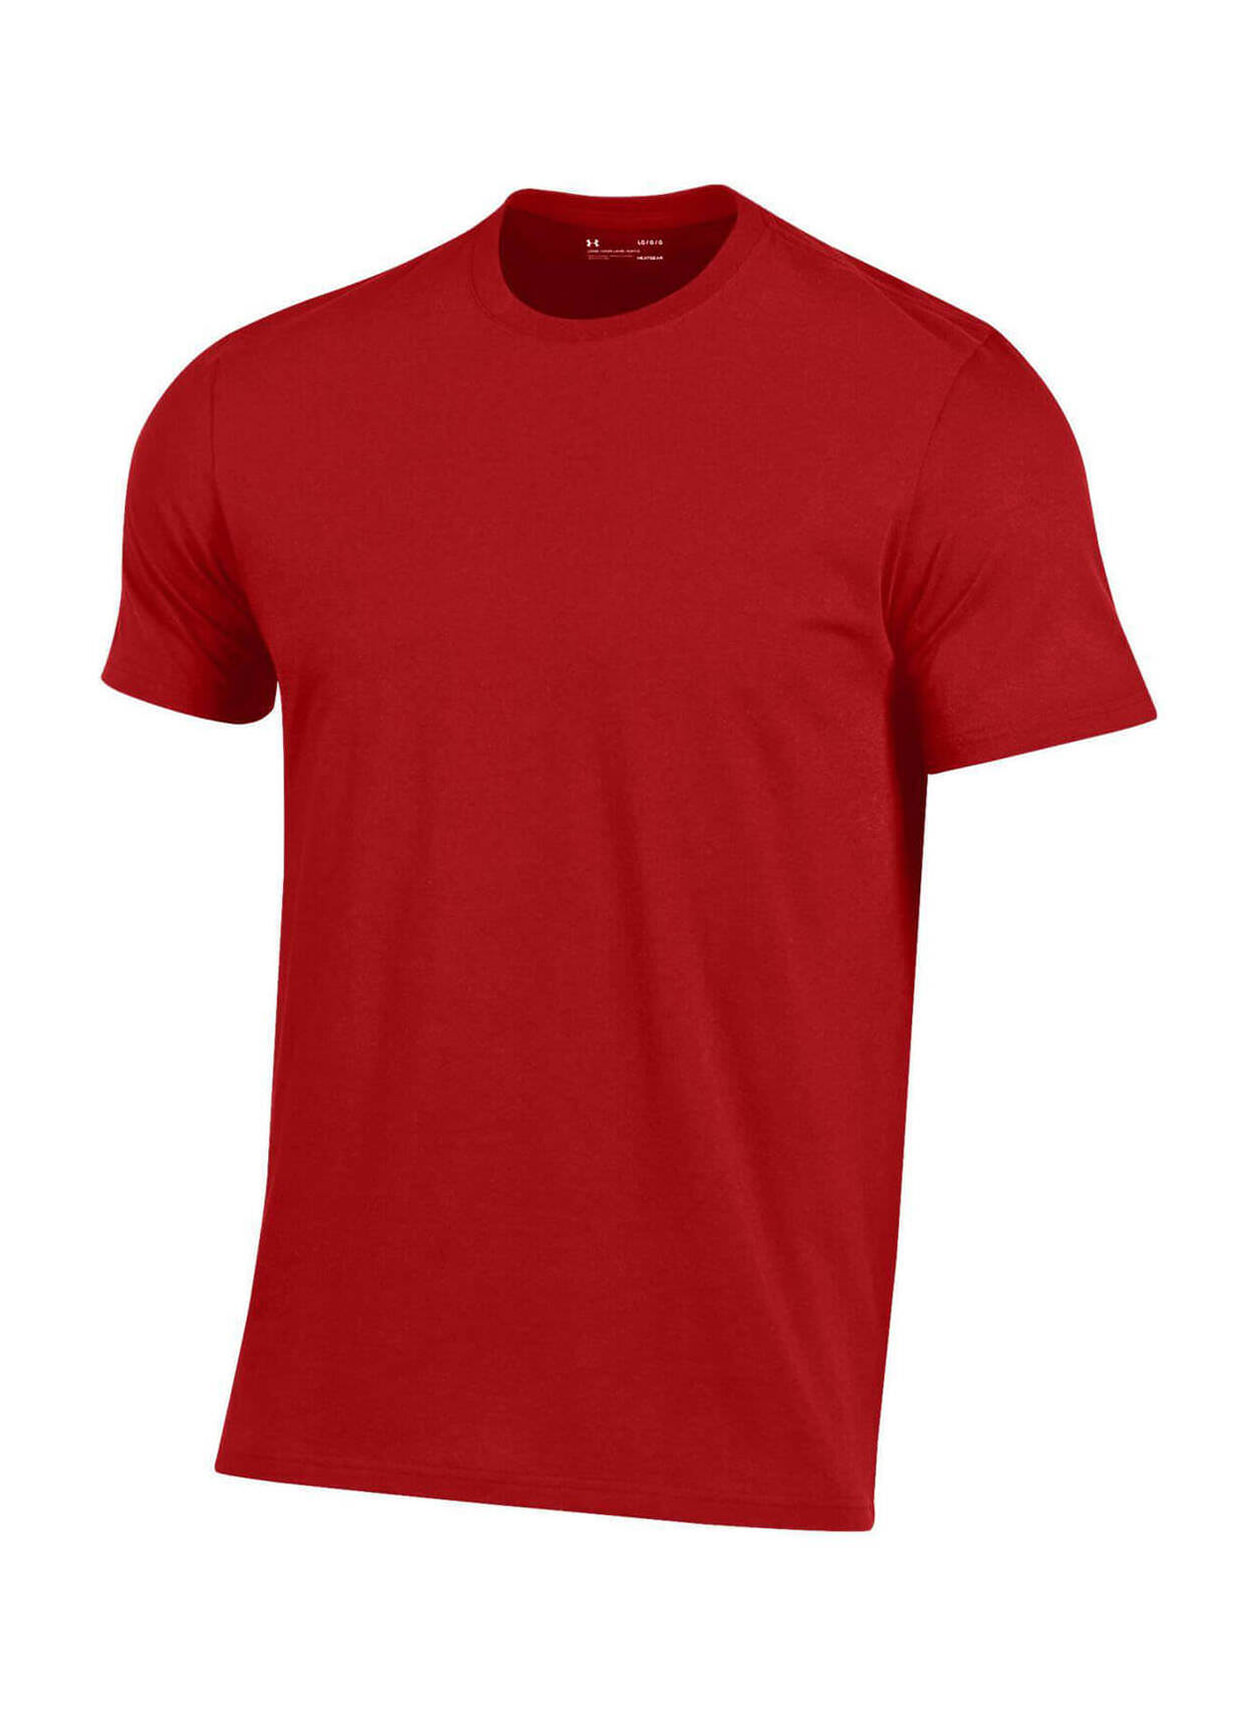 Buy Unisex Cotton Printed Under Armour T-Shirt - Black (MI15)